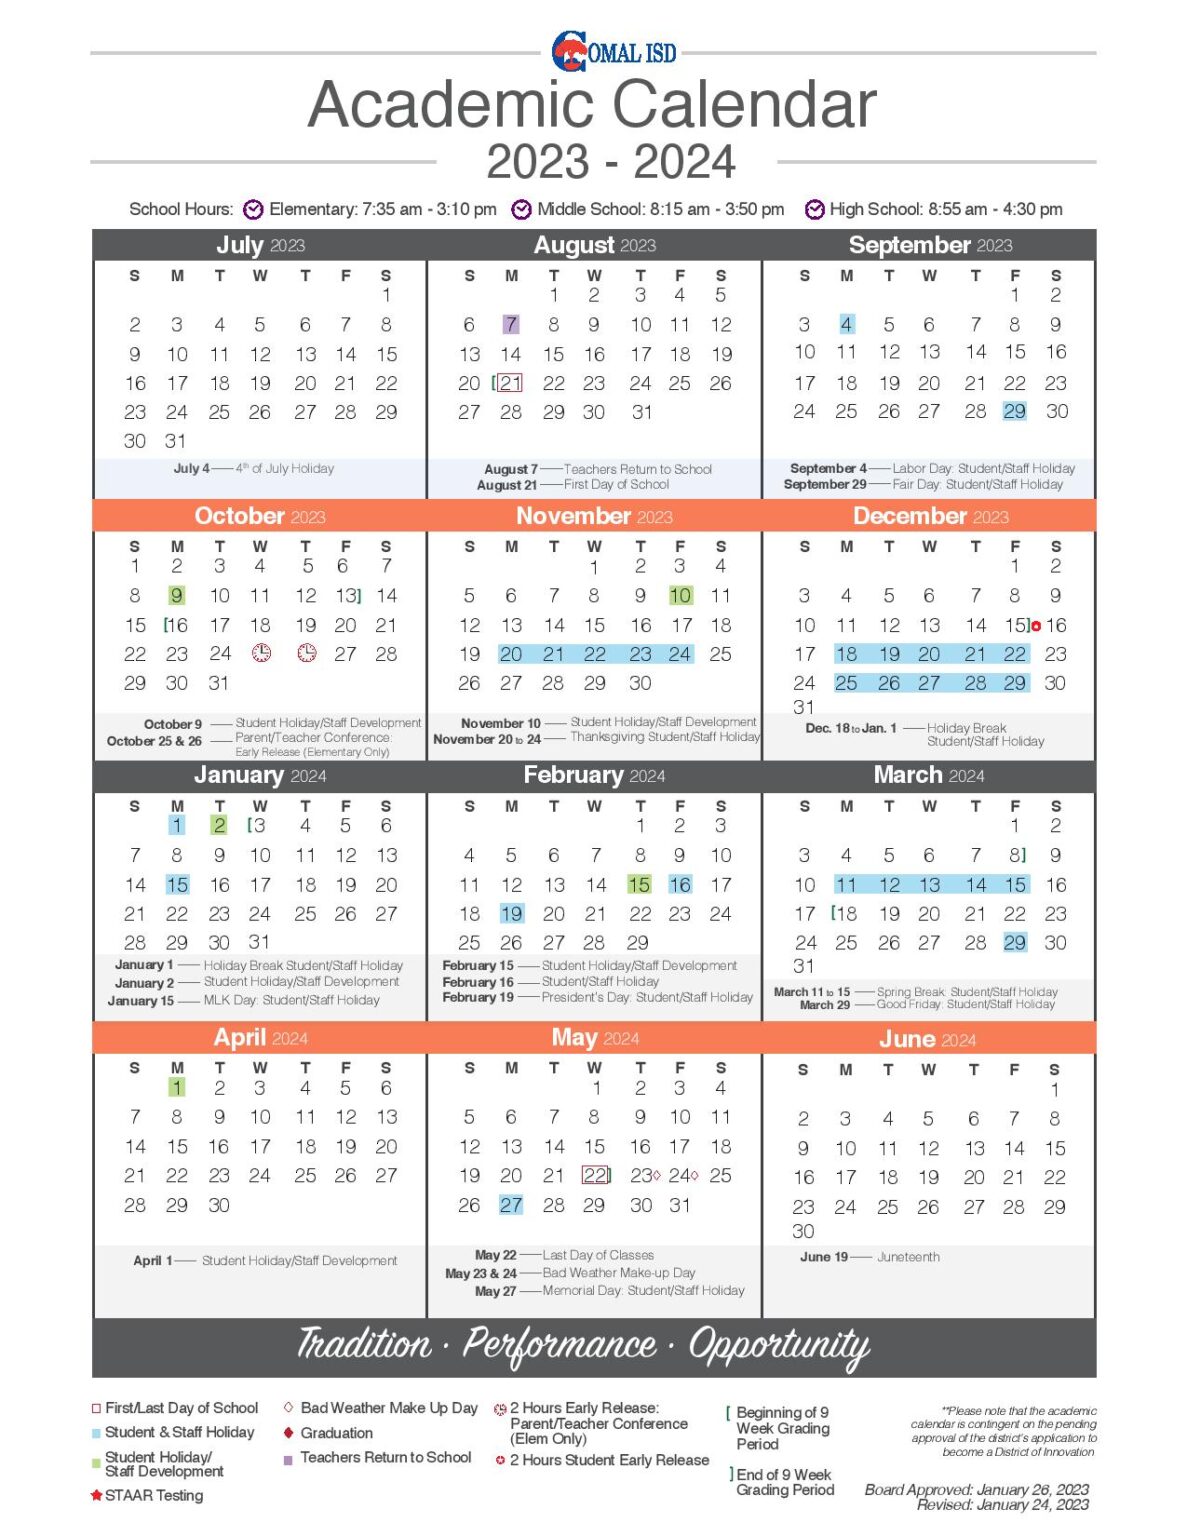 Comal Independent School District Calendar 20232024 in PDF